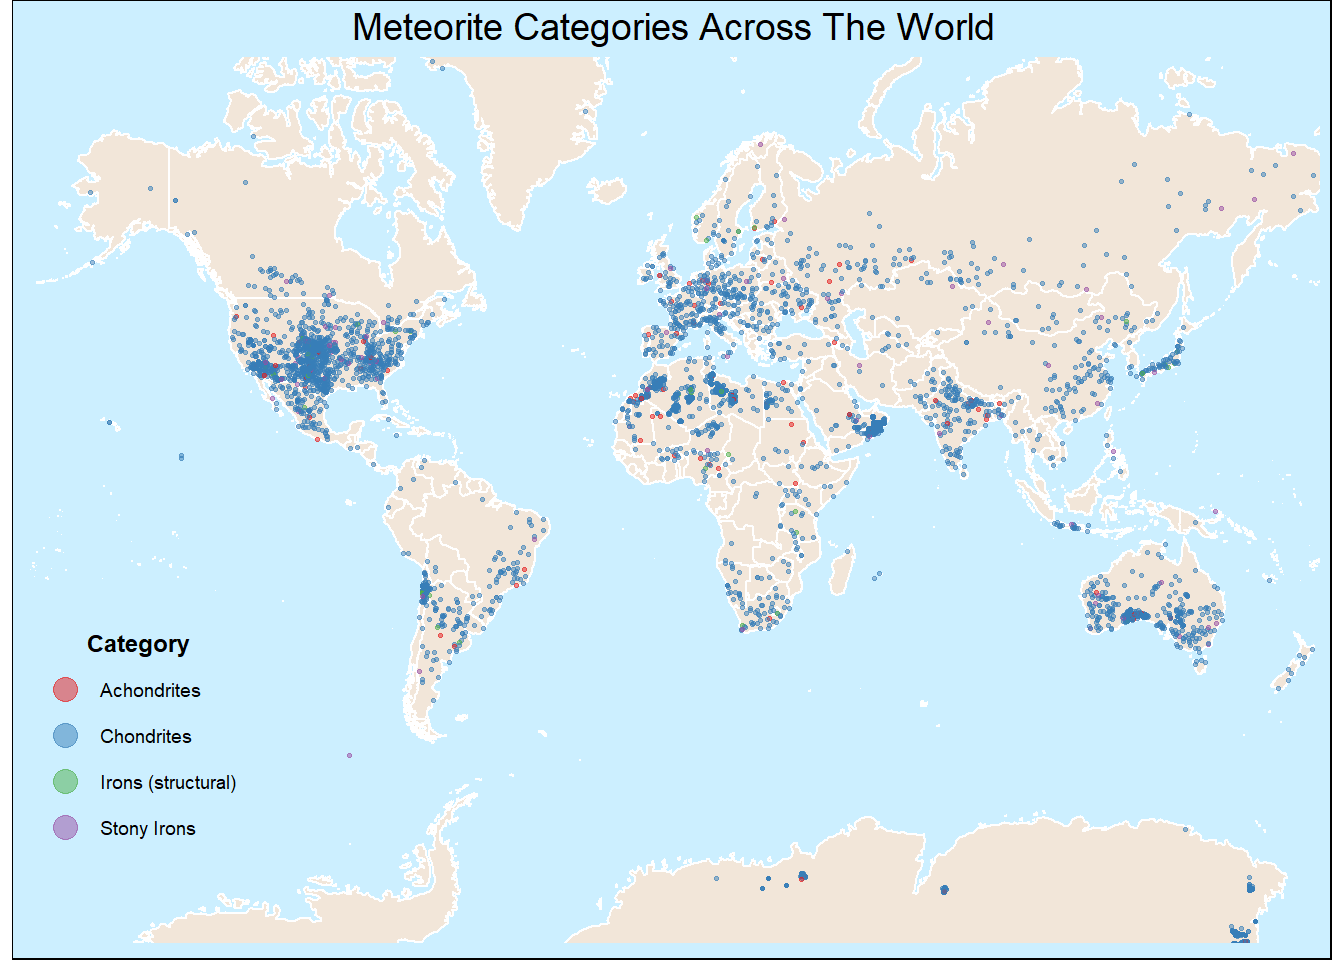 Meteorite Categories Across the World